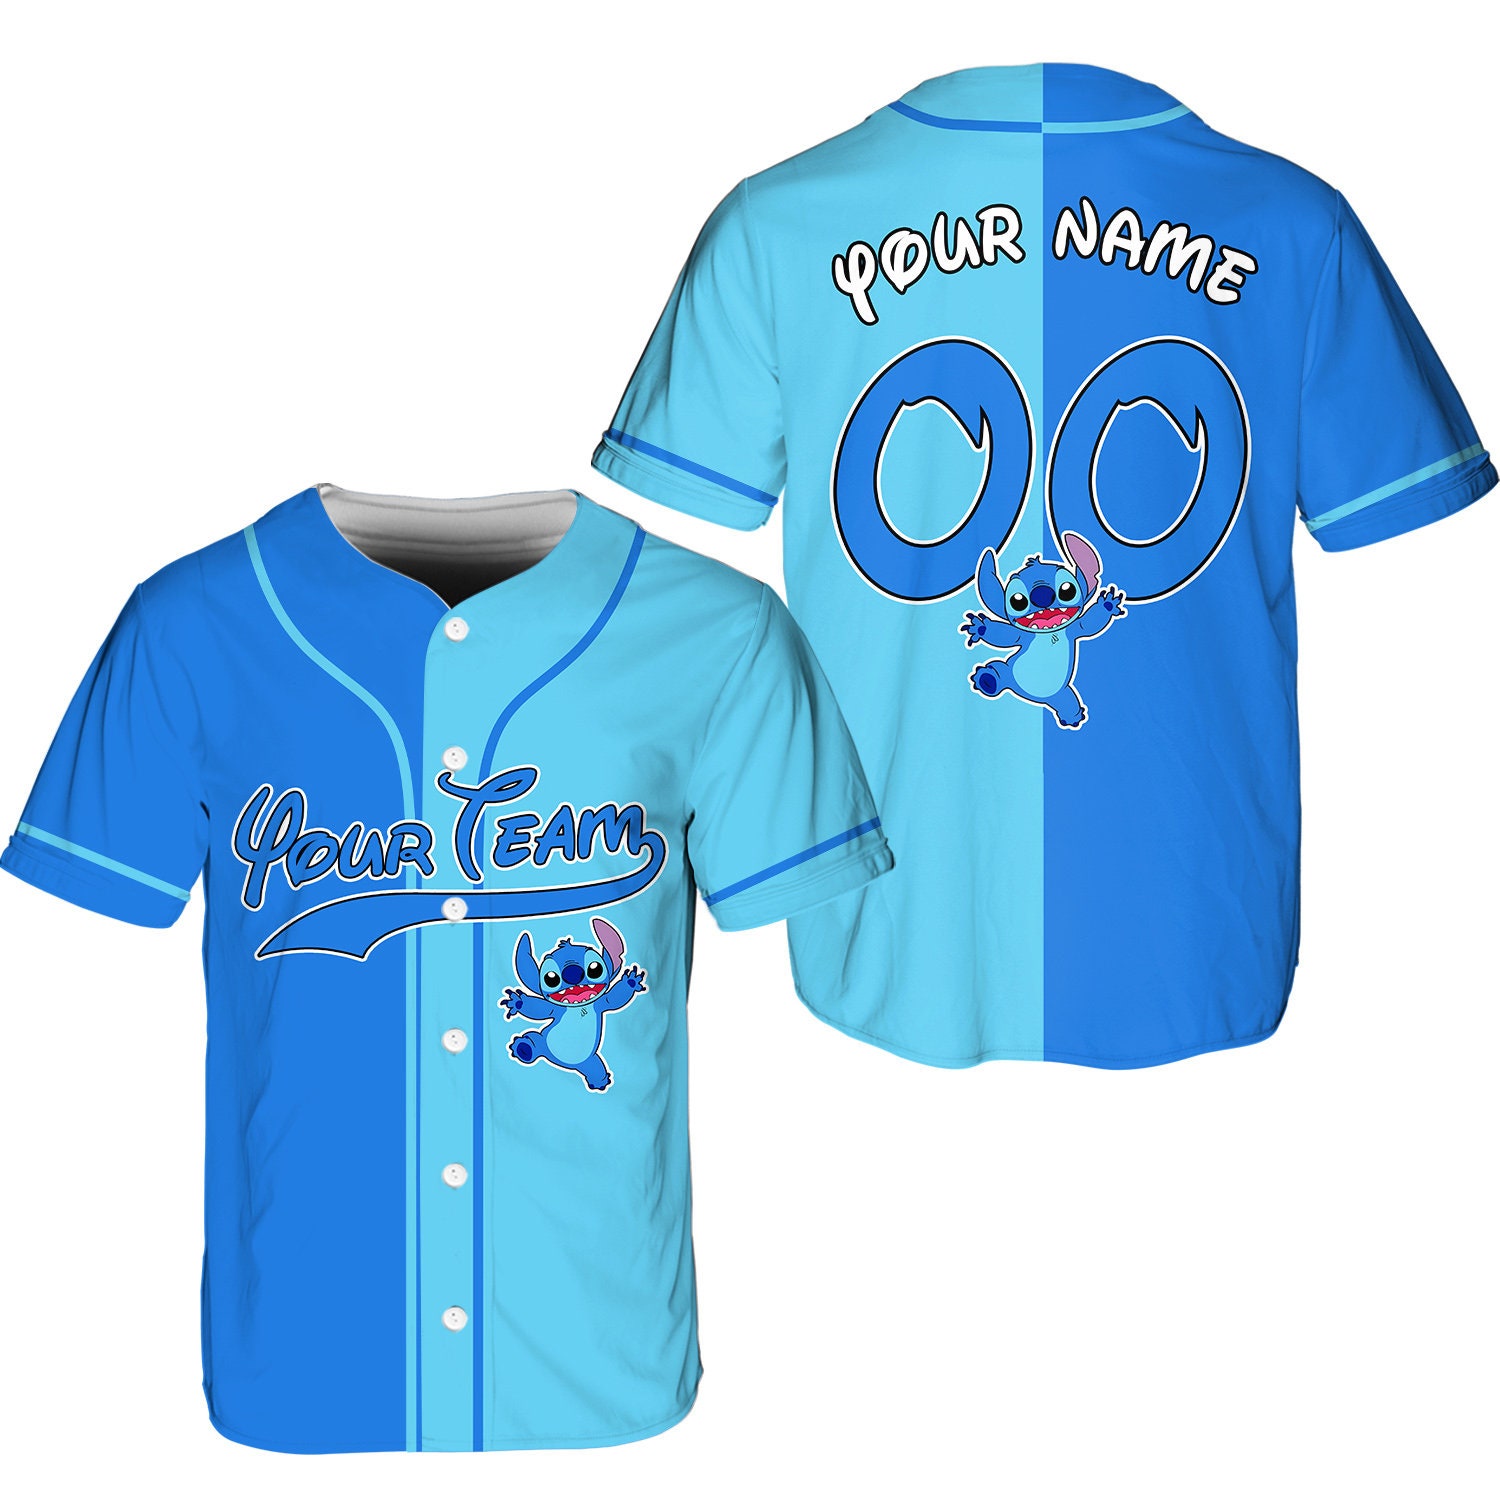 Personalized Disney Characters Baseball Jersey, Disney Family Jersey, Matching Disney